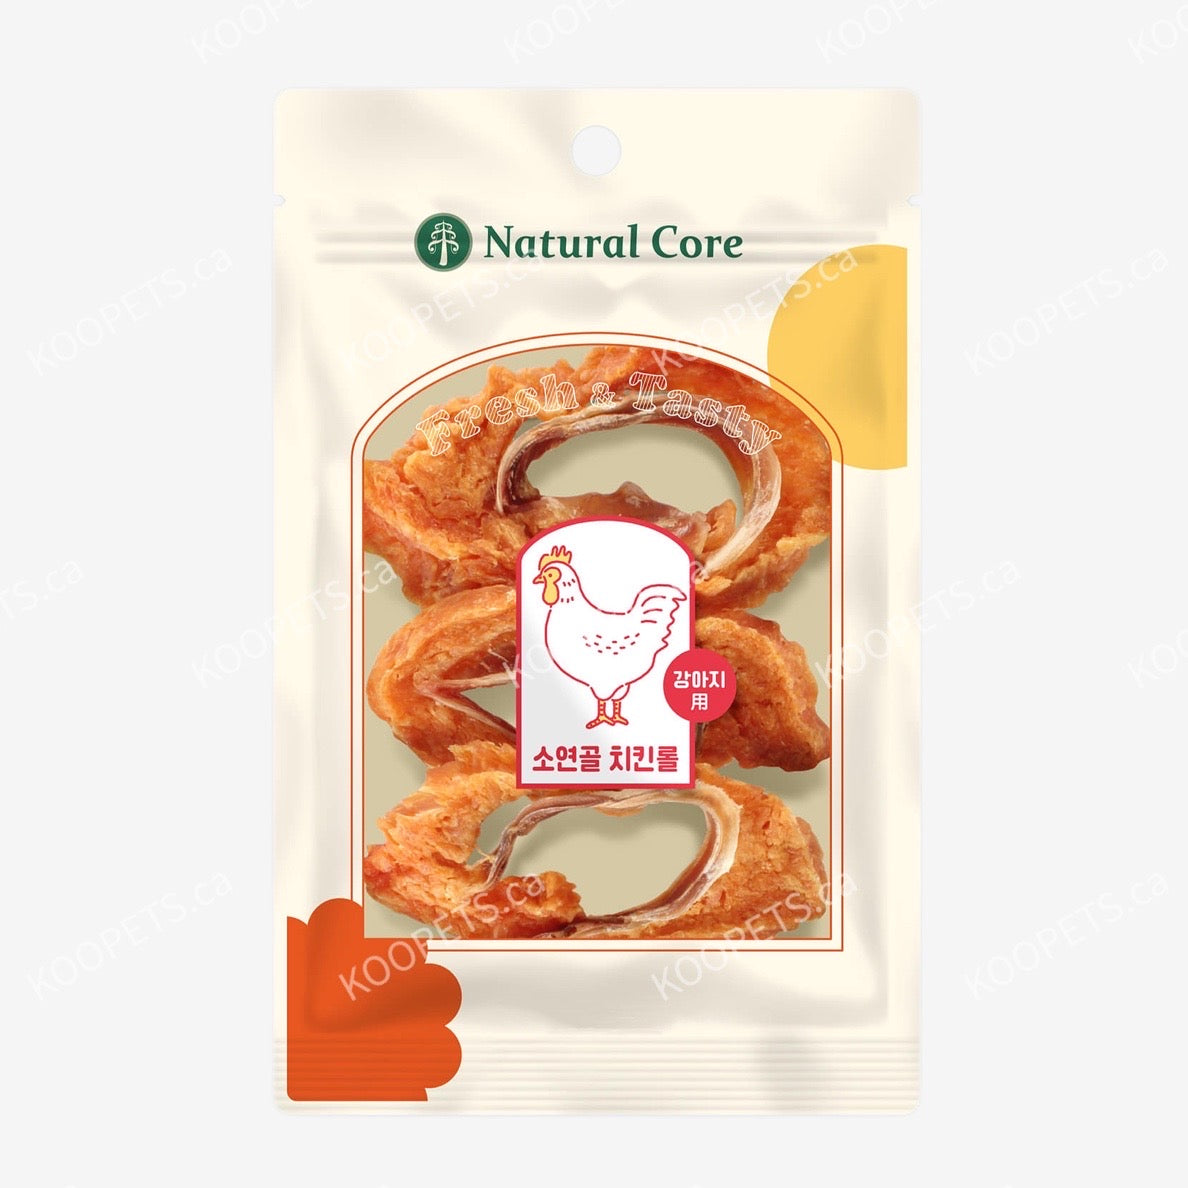 Natural Core | 犬用零食 - 鸡肉/鸭肉牛软骨圈 (完整的圈)